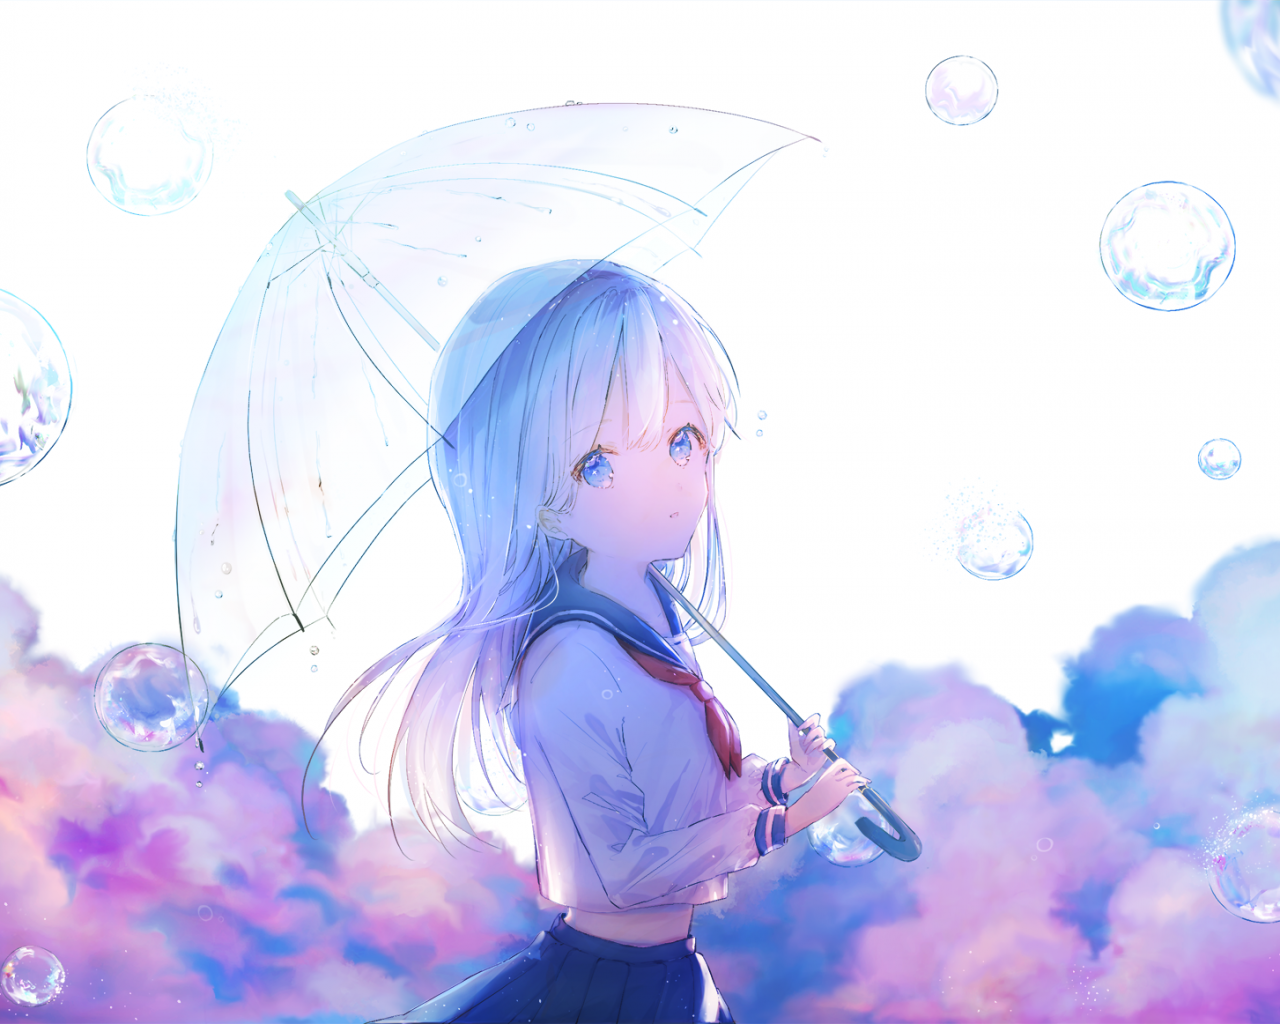 Download 1280x1024 Anime School Girl, Transparent Umbrella, Bubbles Wallpapers